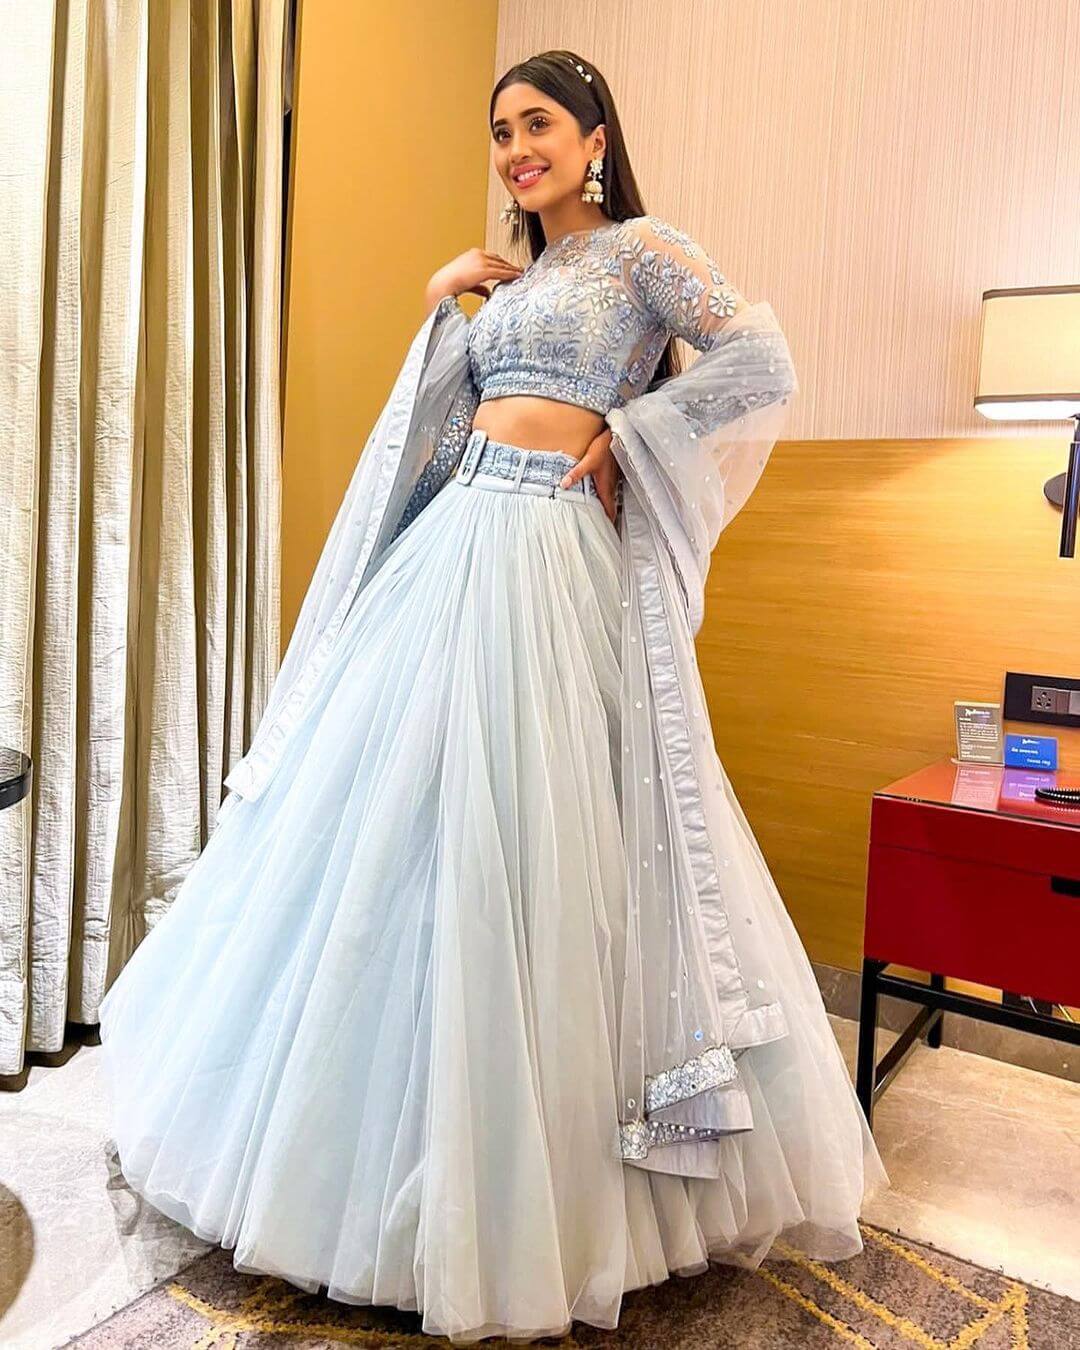 Shivangi Look Dazzling In Ivory Blue Lehenga Outfit